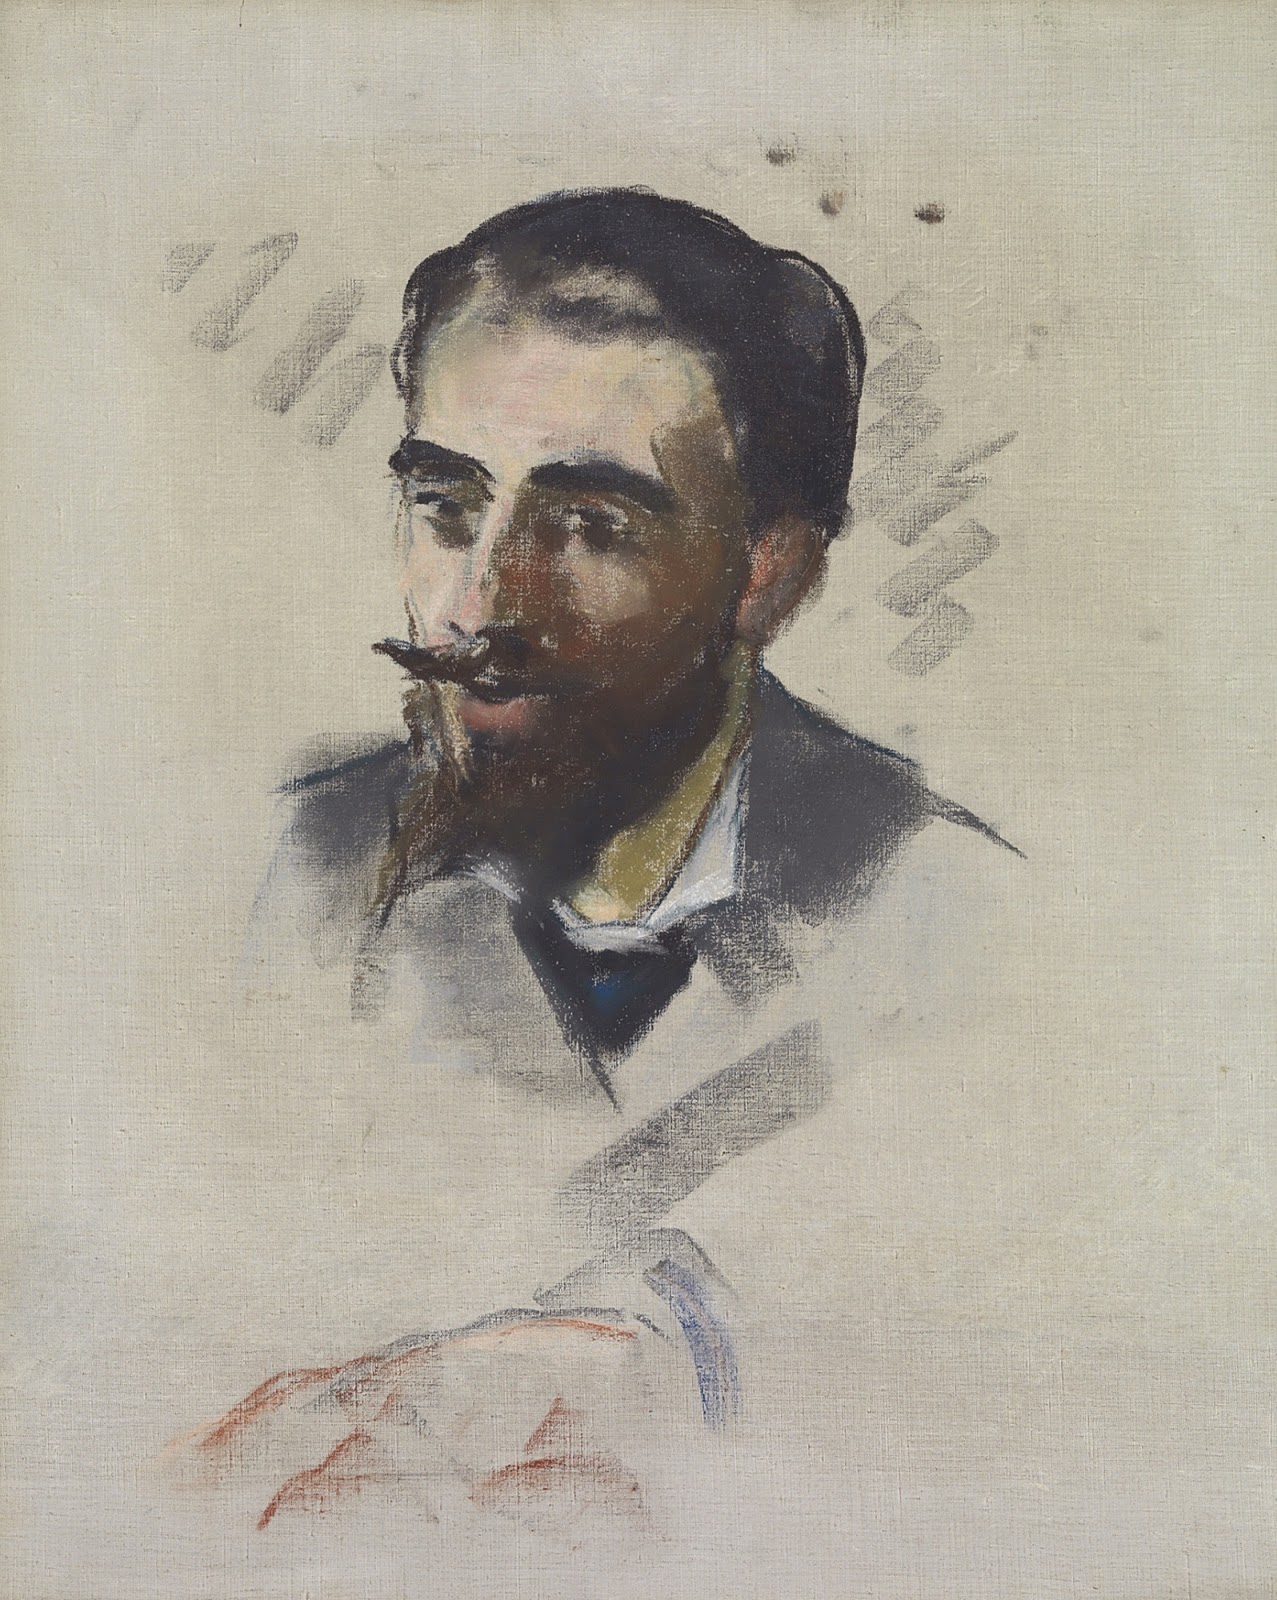 Edouard+Manet-1832-1883 (124).jpg